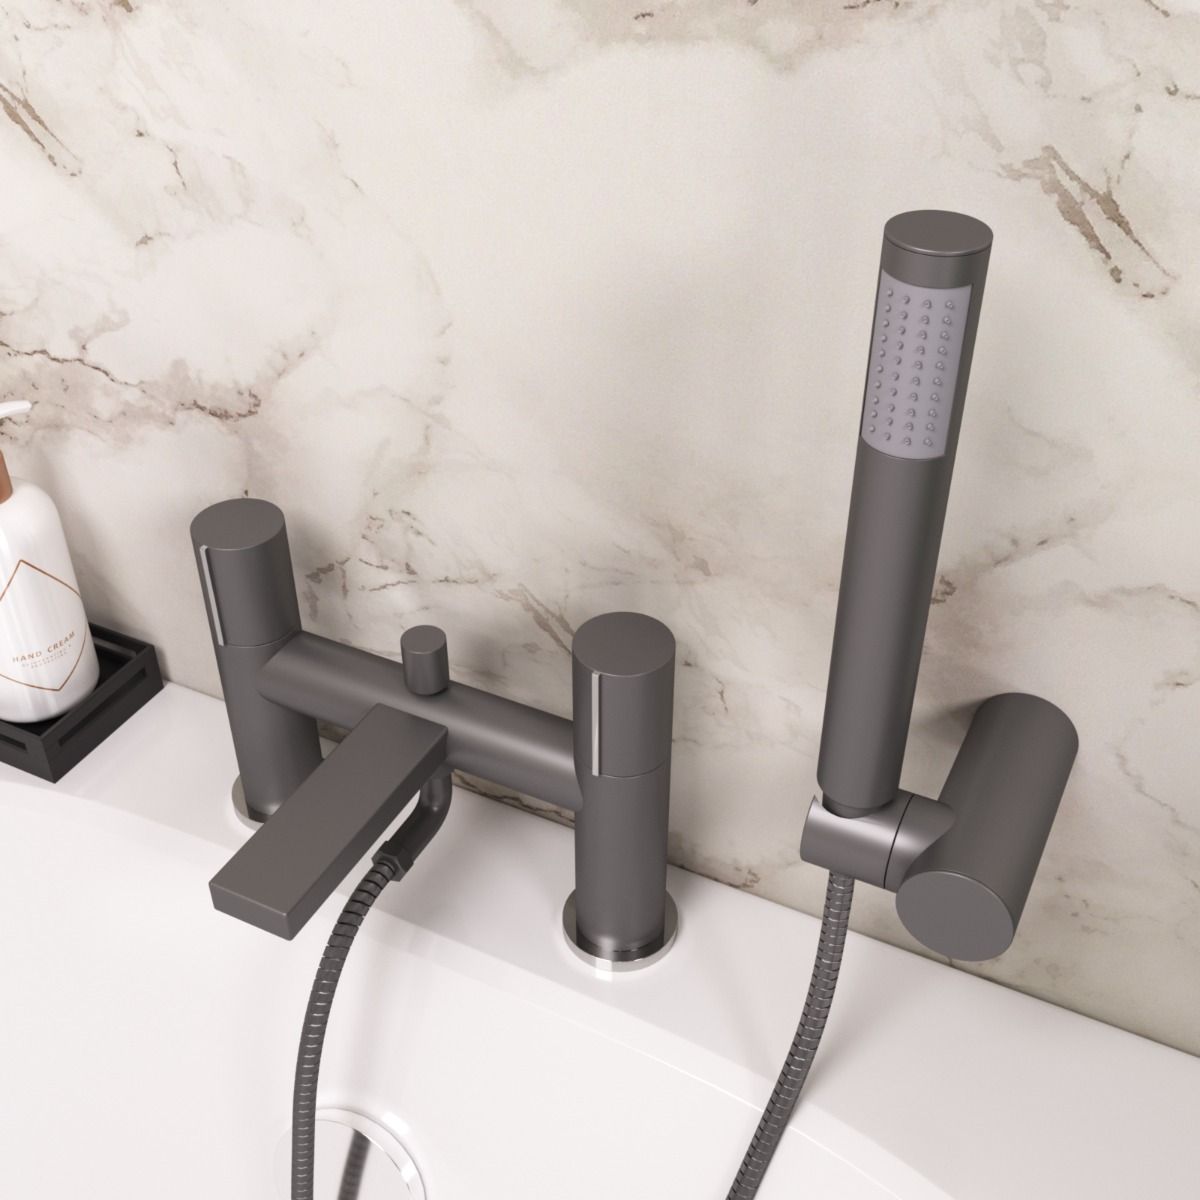 Arte Grey Deck Mounted Handleless Bath Shower Mixer Matt Grey With Handset And Adjustable Holder